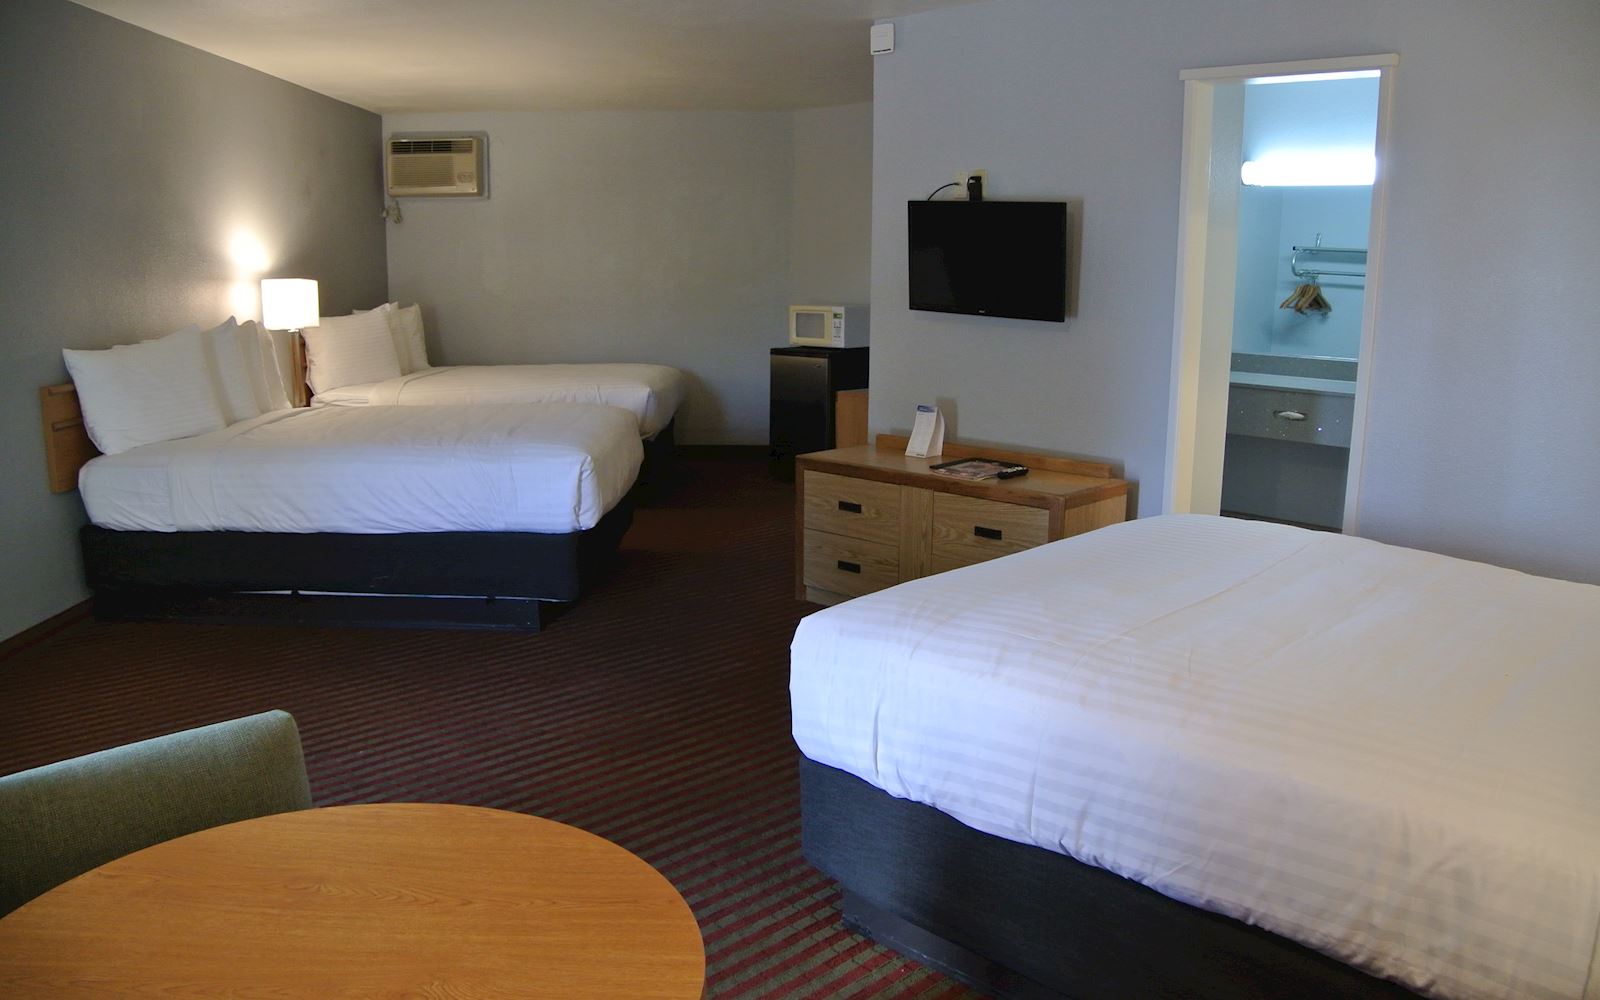 Rooms of Vagabond Inn - San Luis Obispo